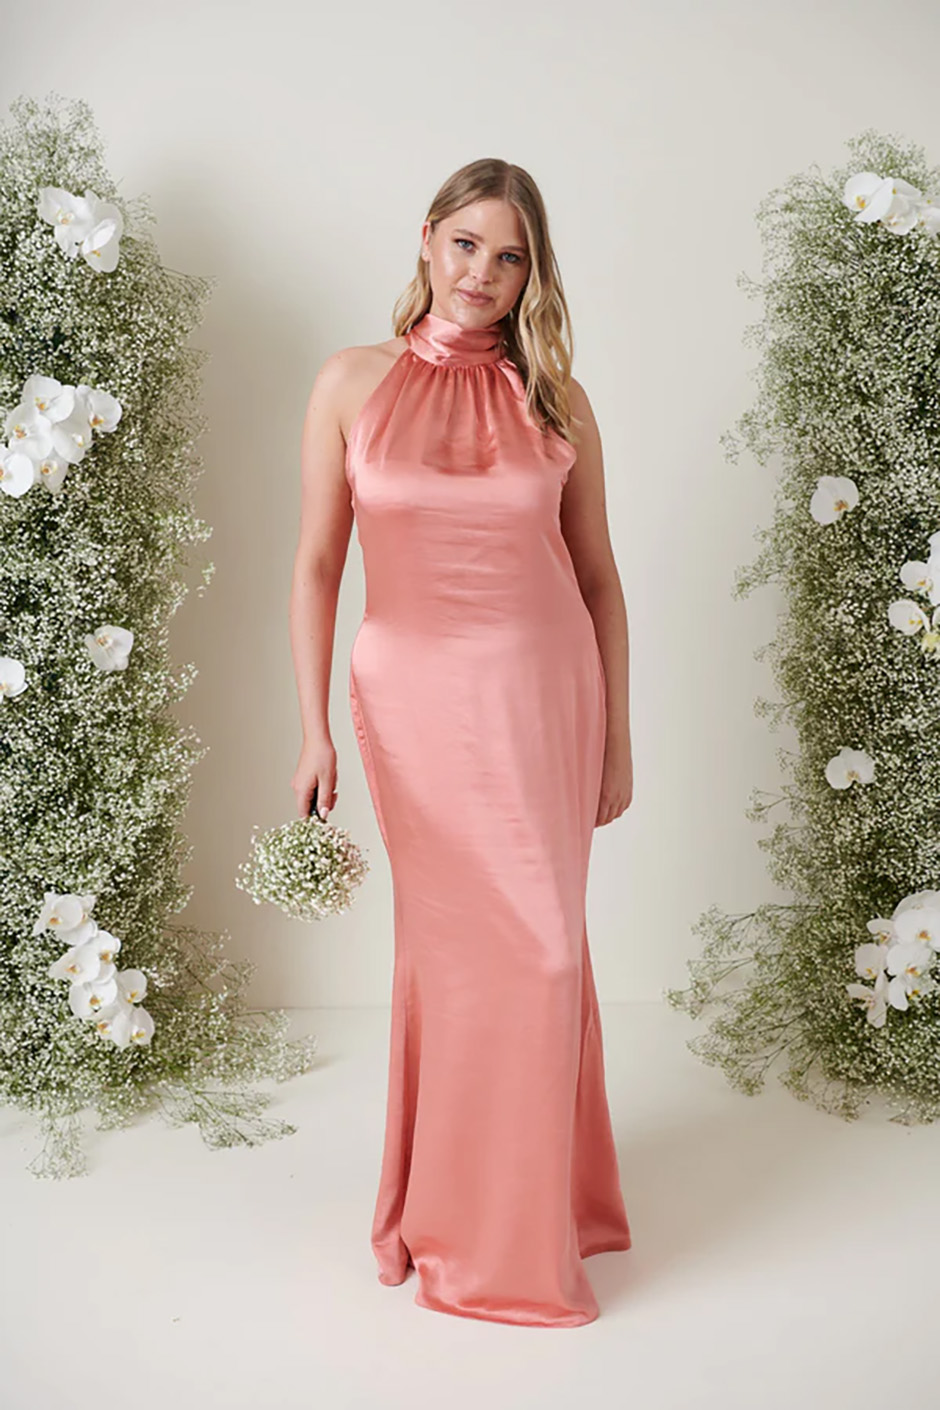 Spring bridesmaid dress from Pretty Lavish - pink/apricot satin maxi dress with halter tie neck 